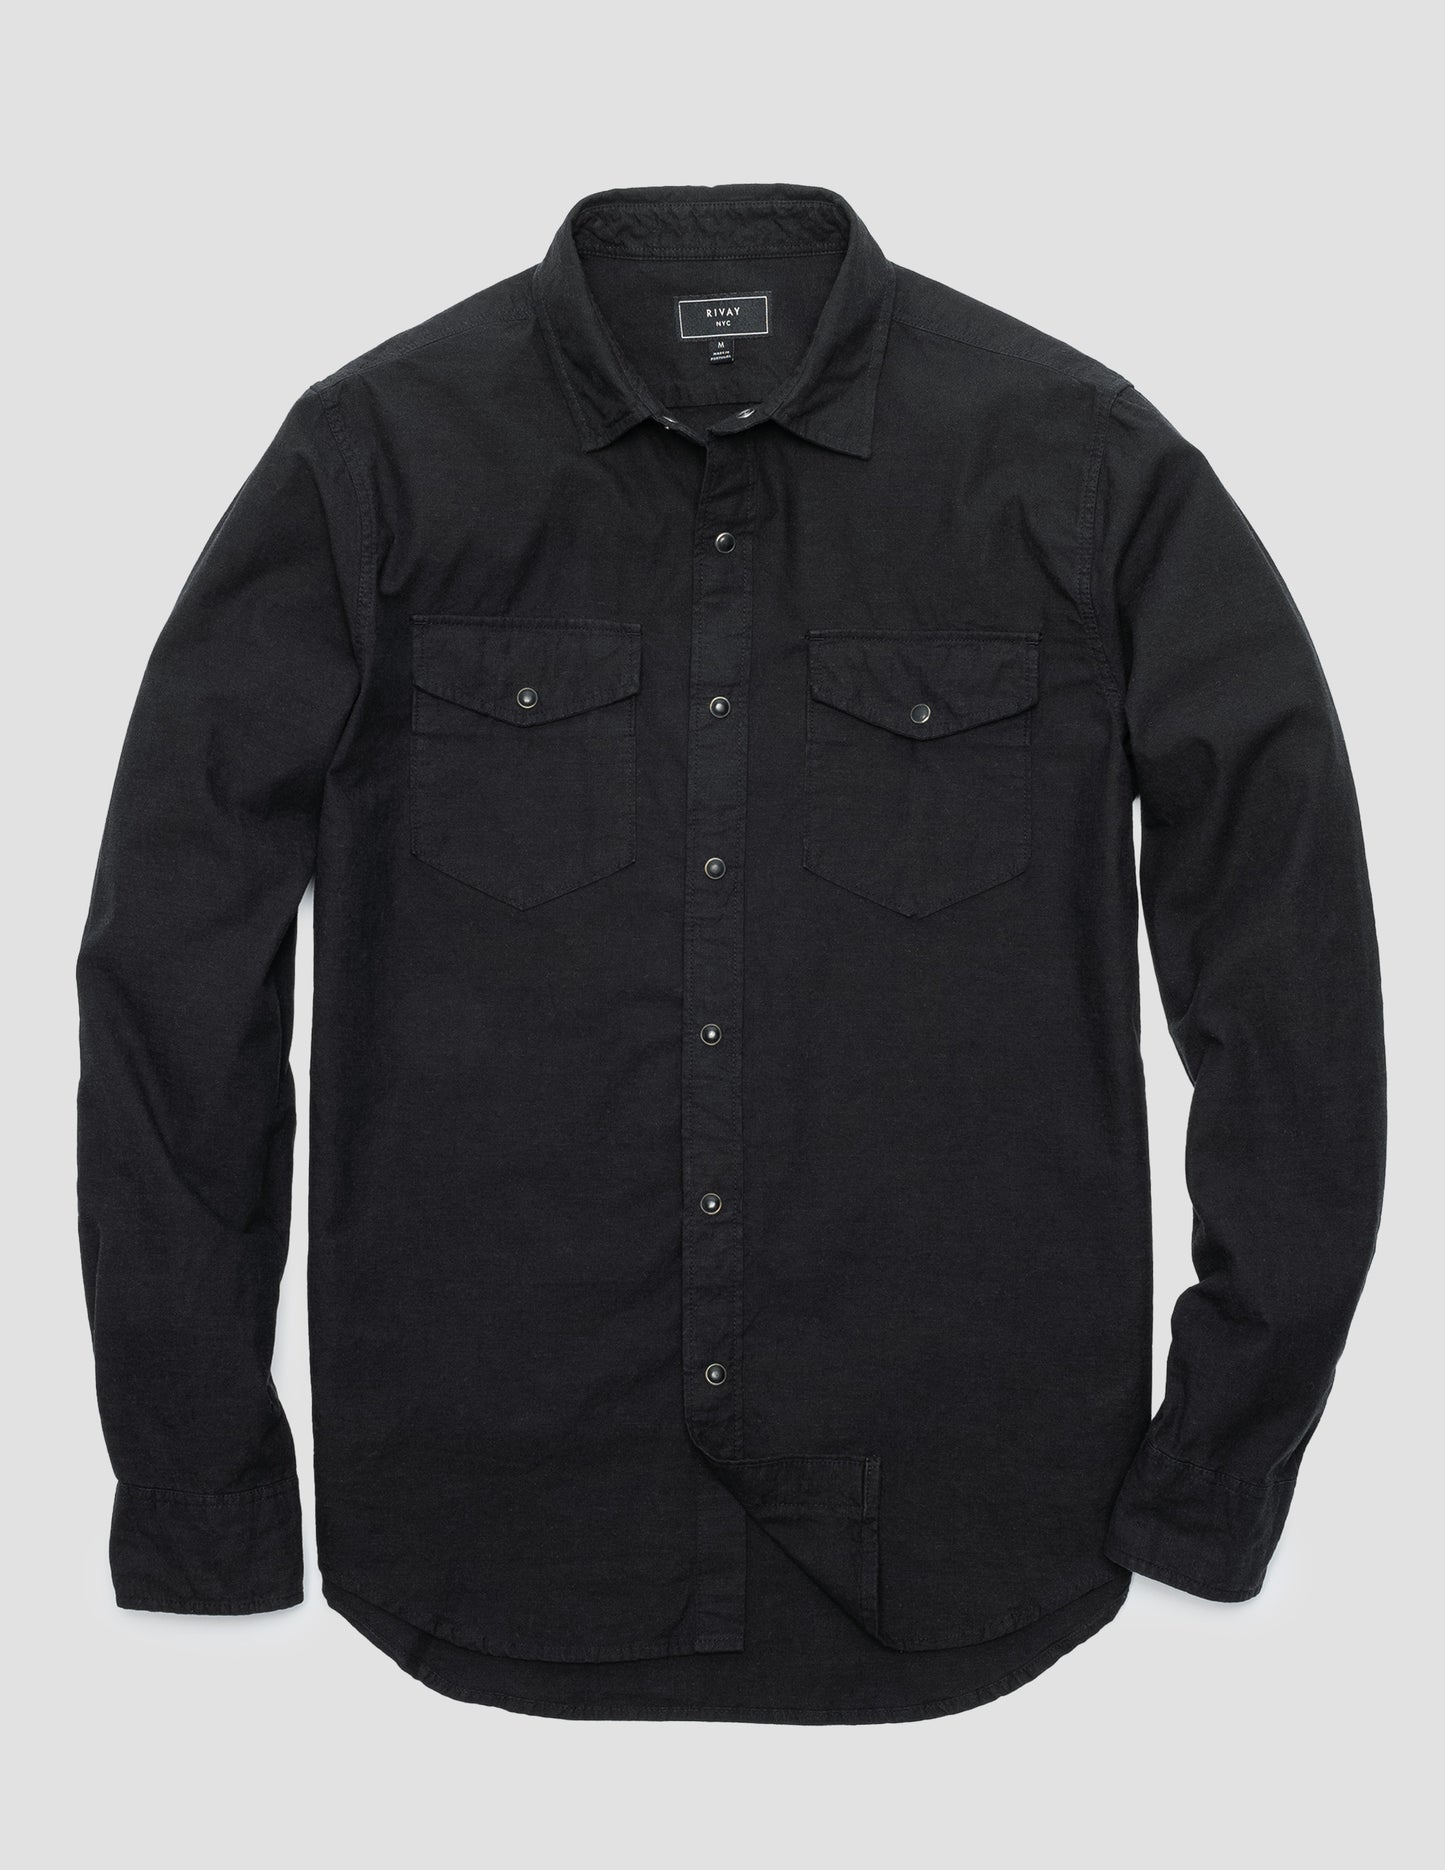 Rivay Harrison Western Shirt in Black Denim